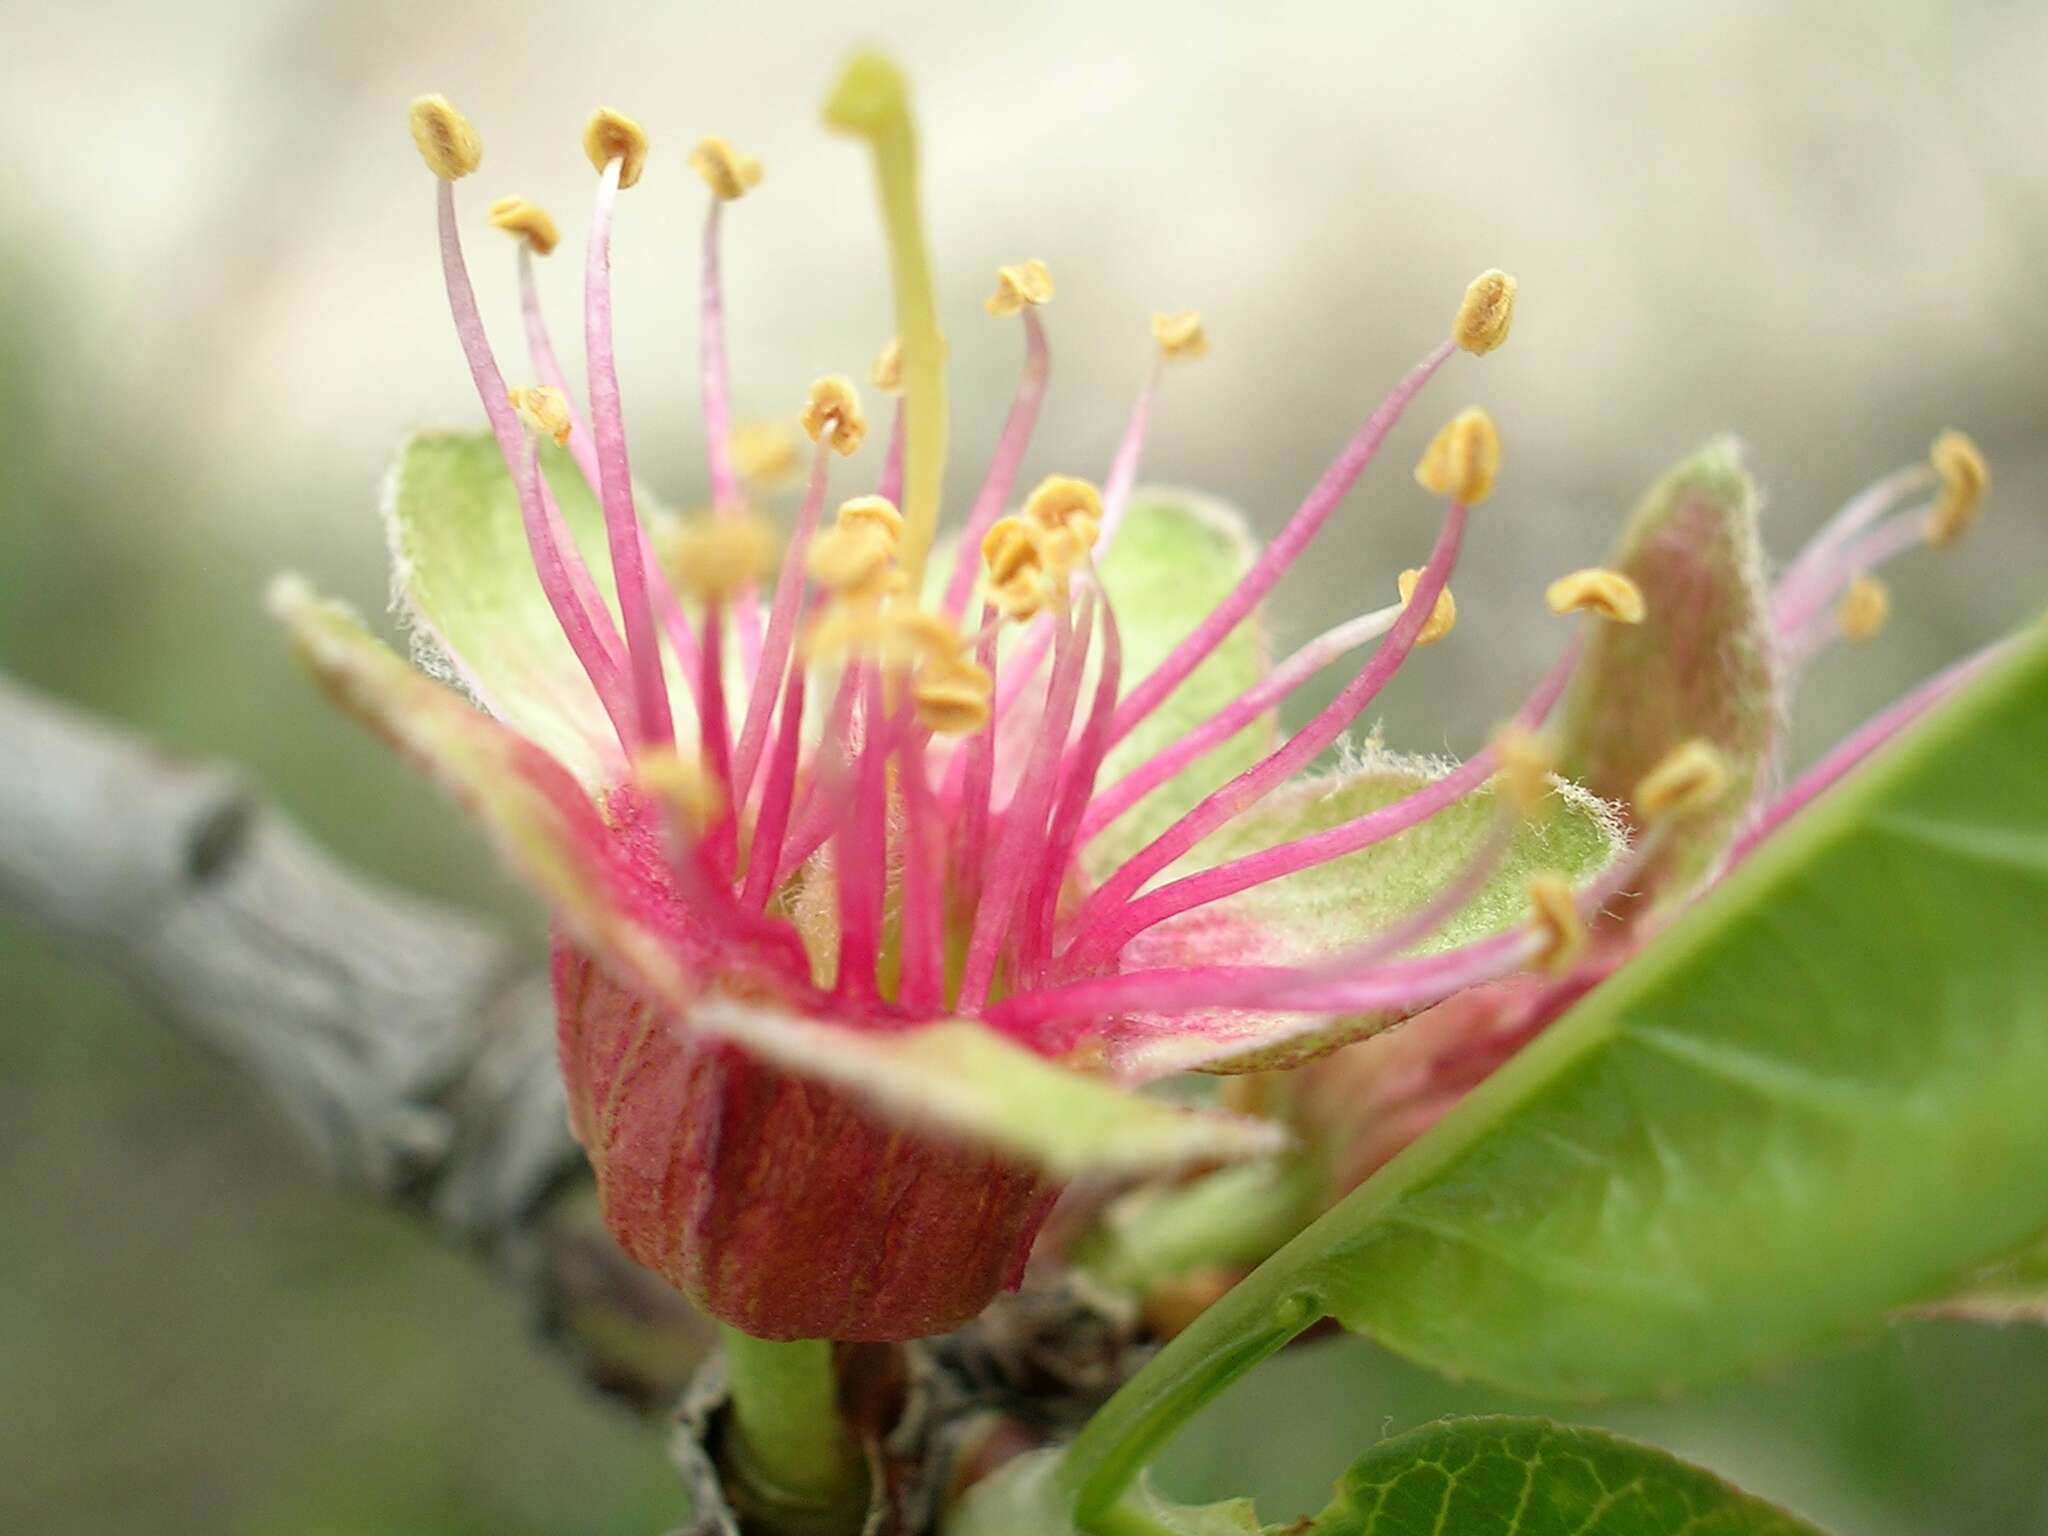 Image of flowering almond